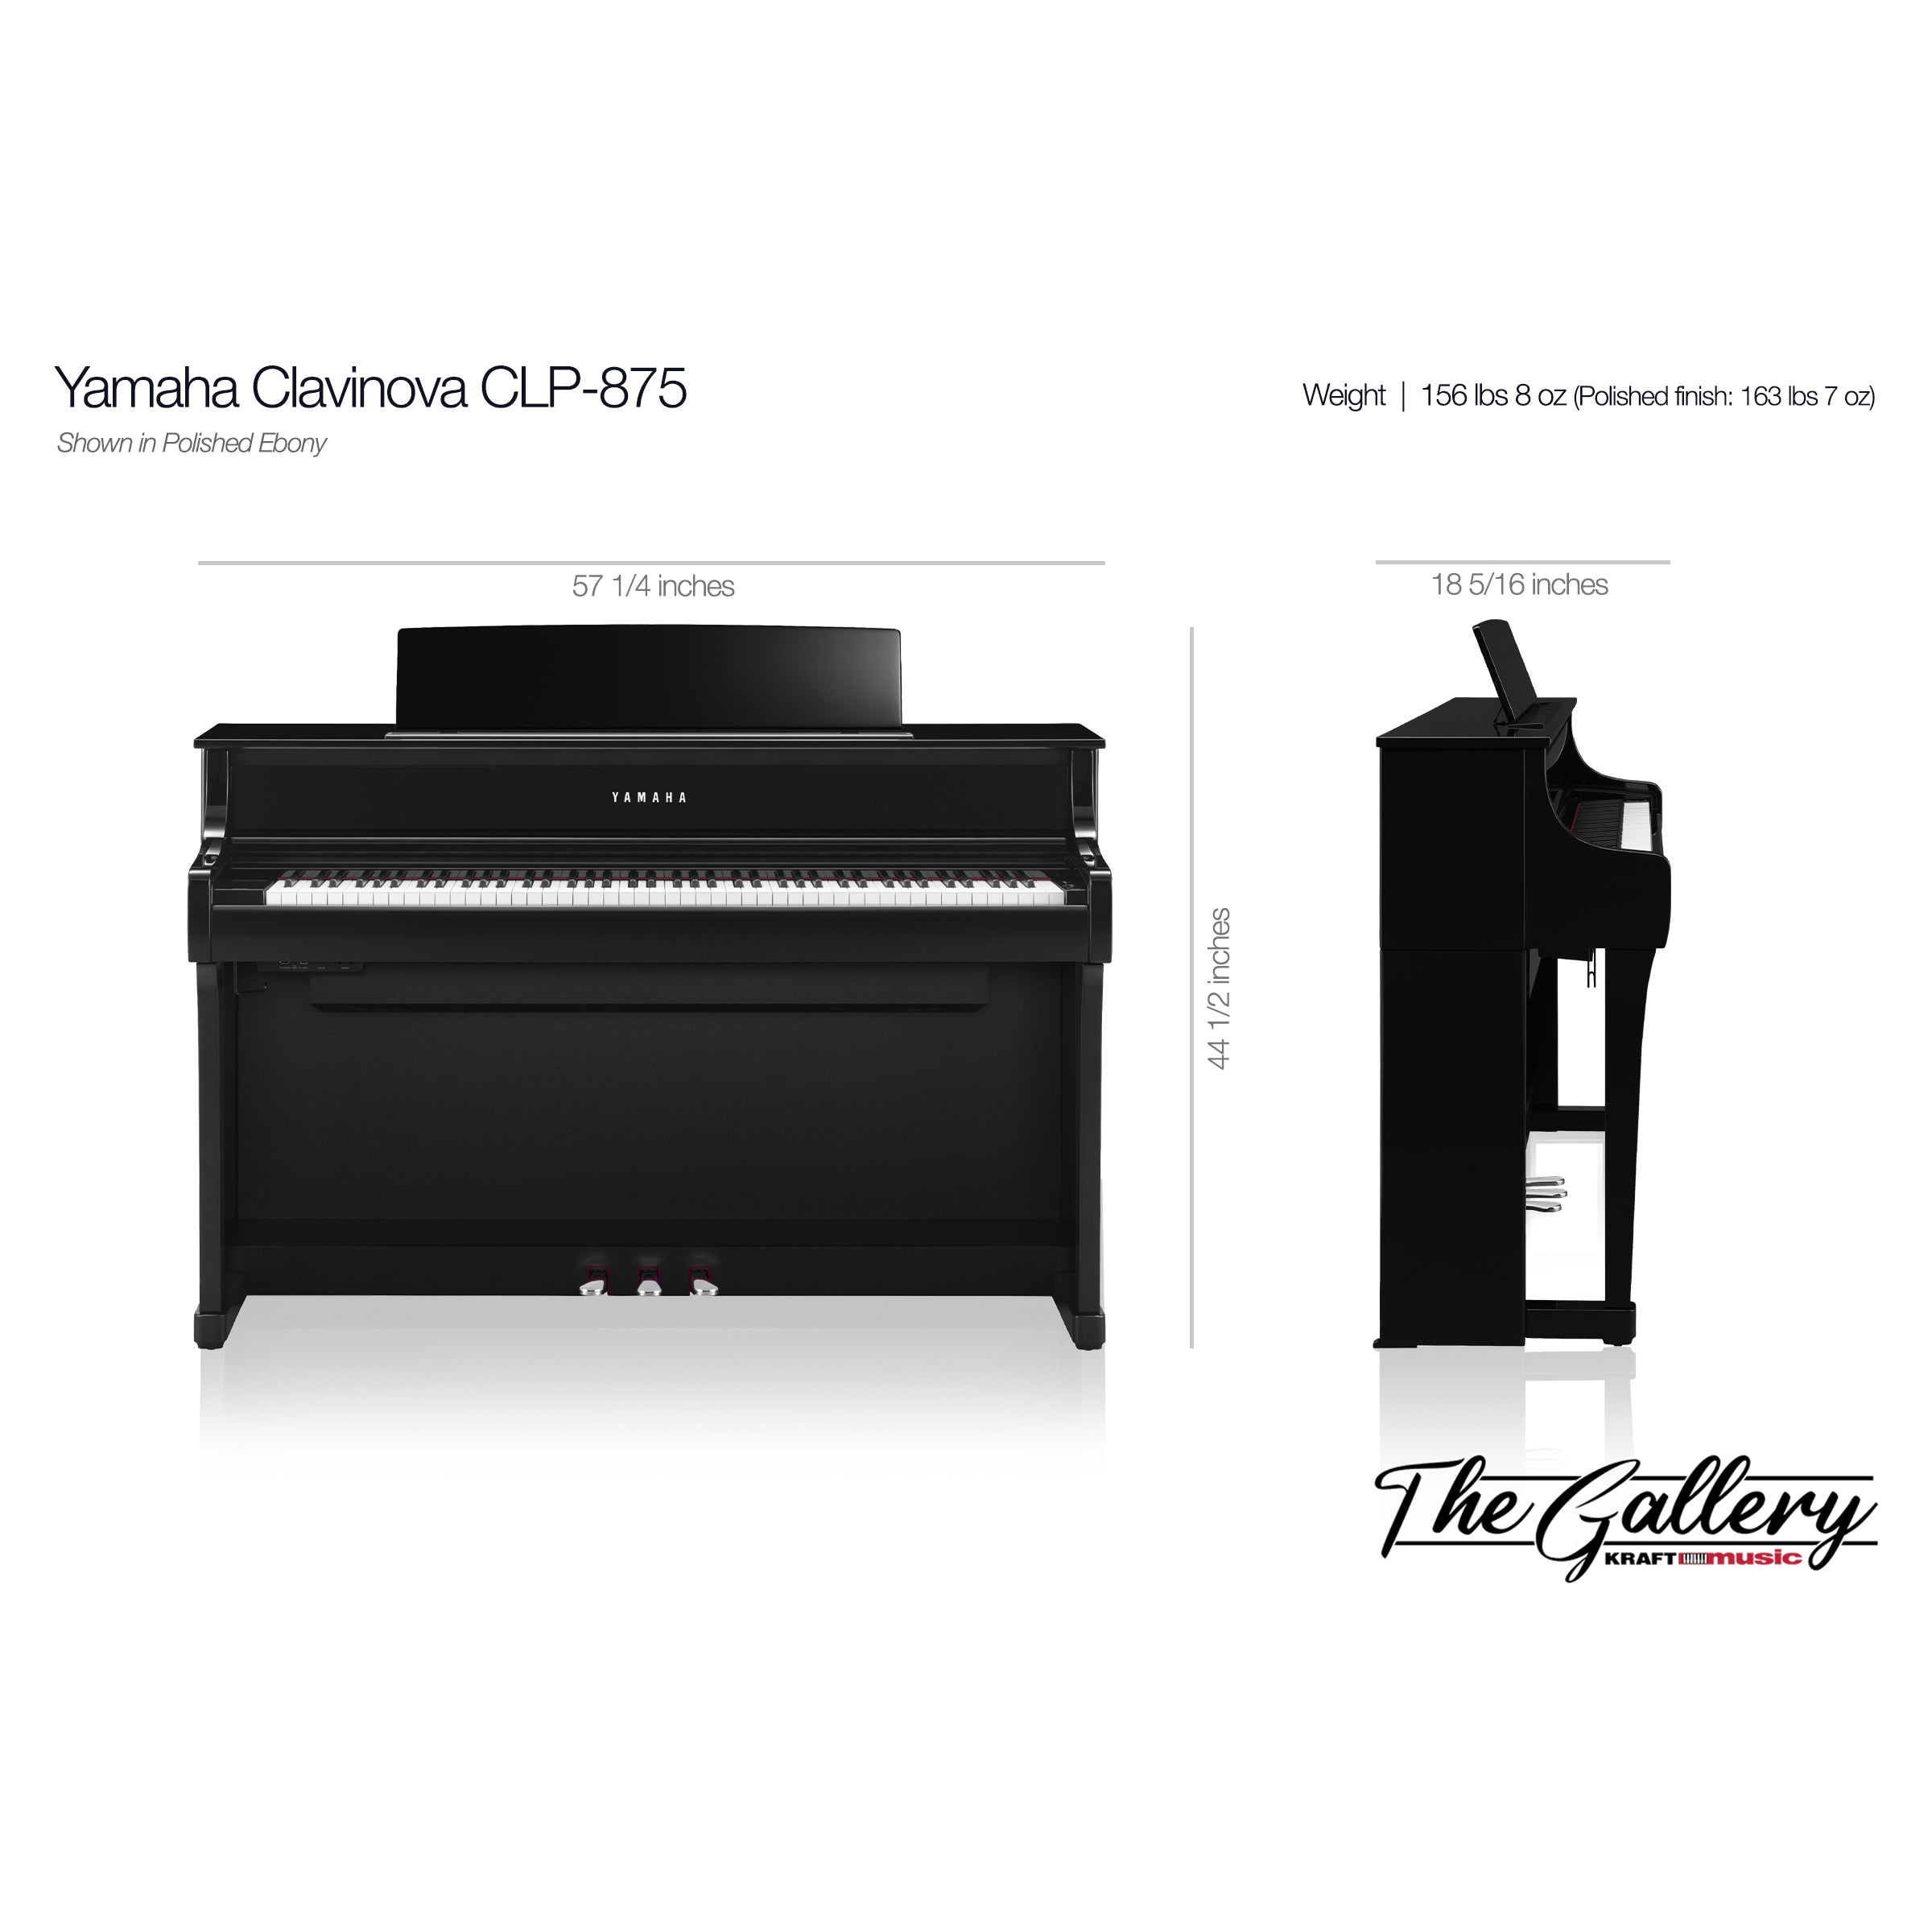 Yamaha Clavinova CLP-875 Digital Pianos - Dimensions